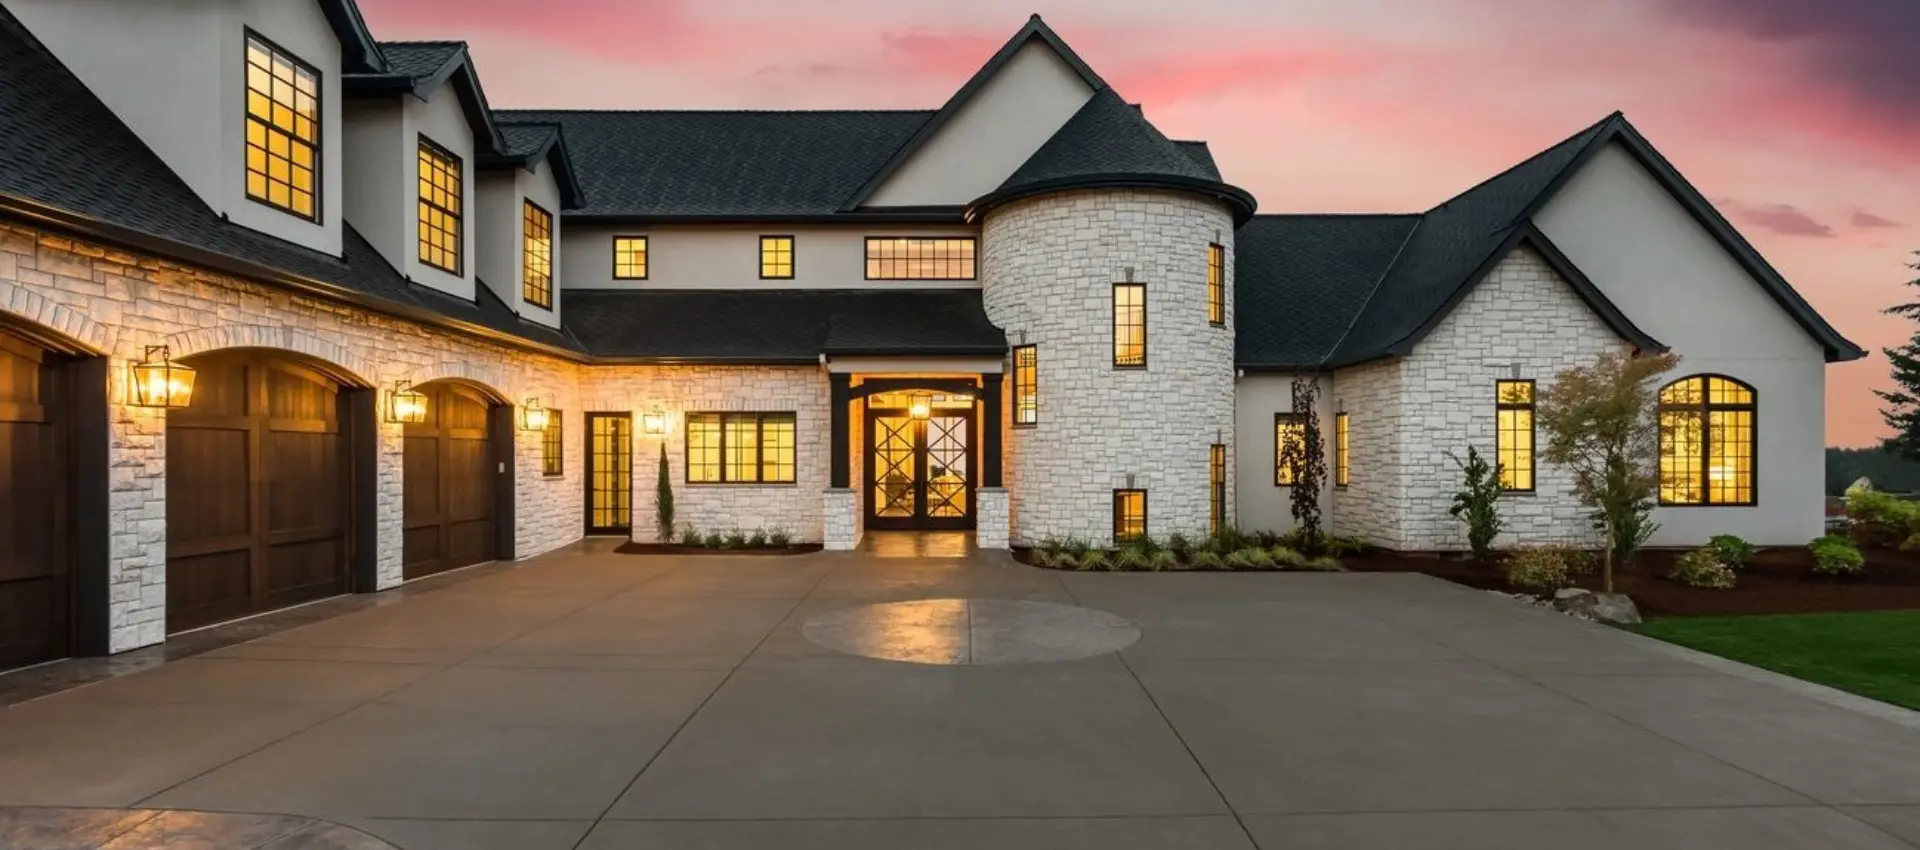 Luxurious suburban home with stone facade at dusk.